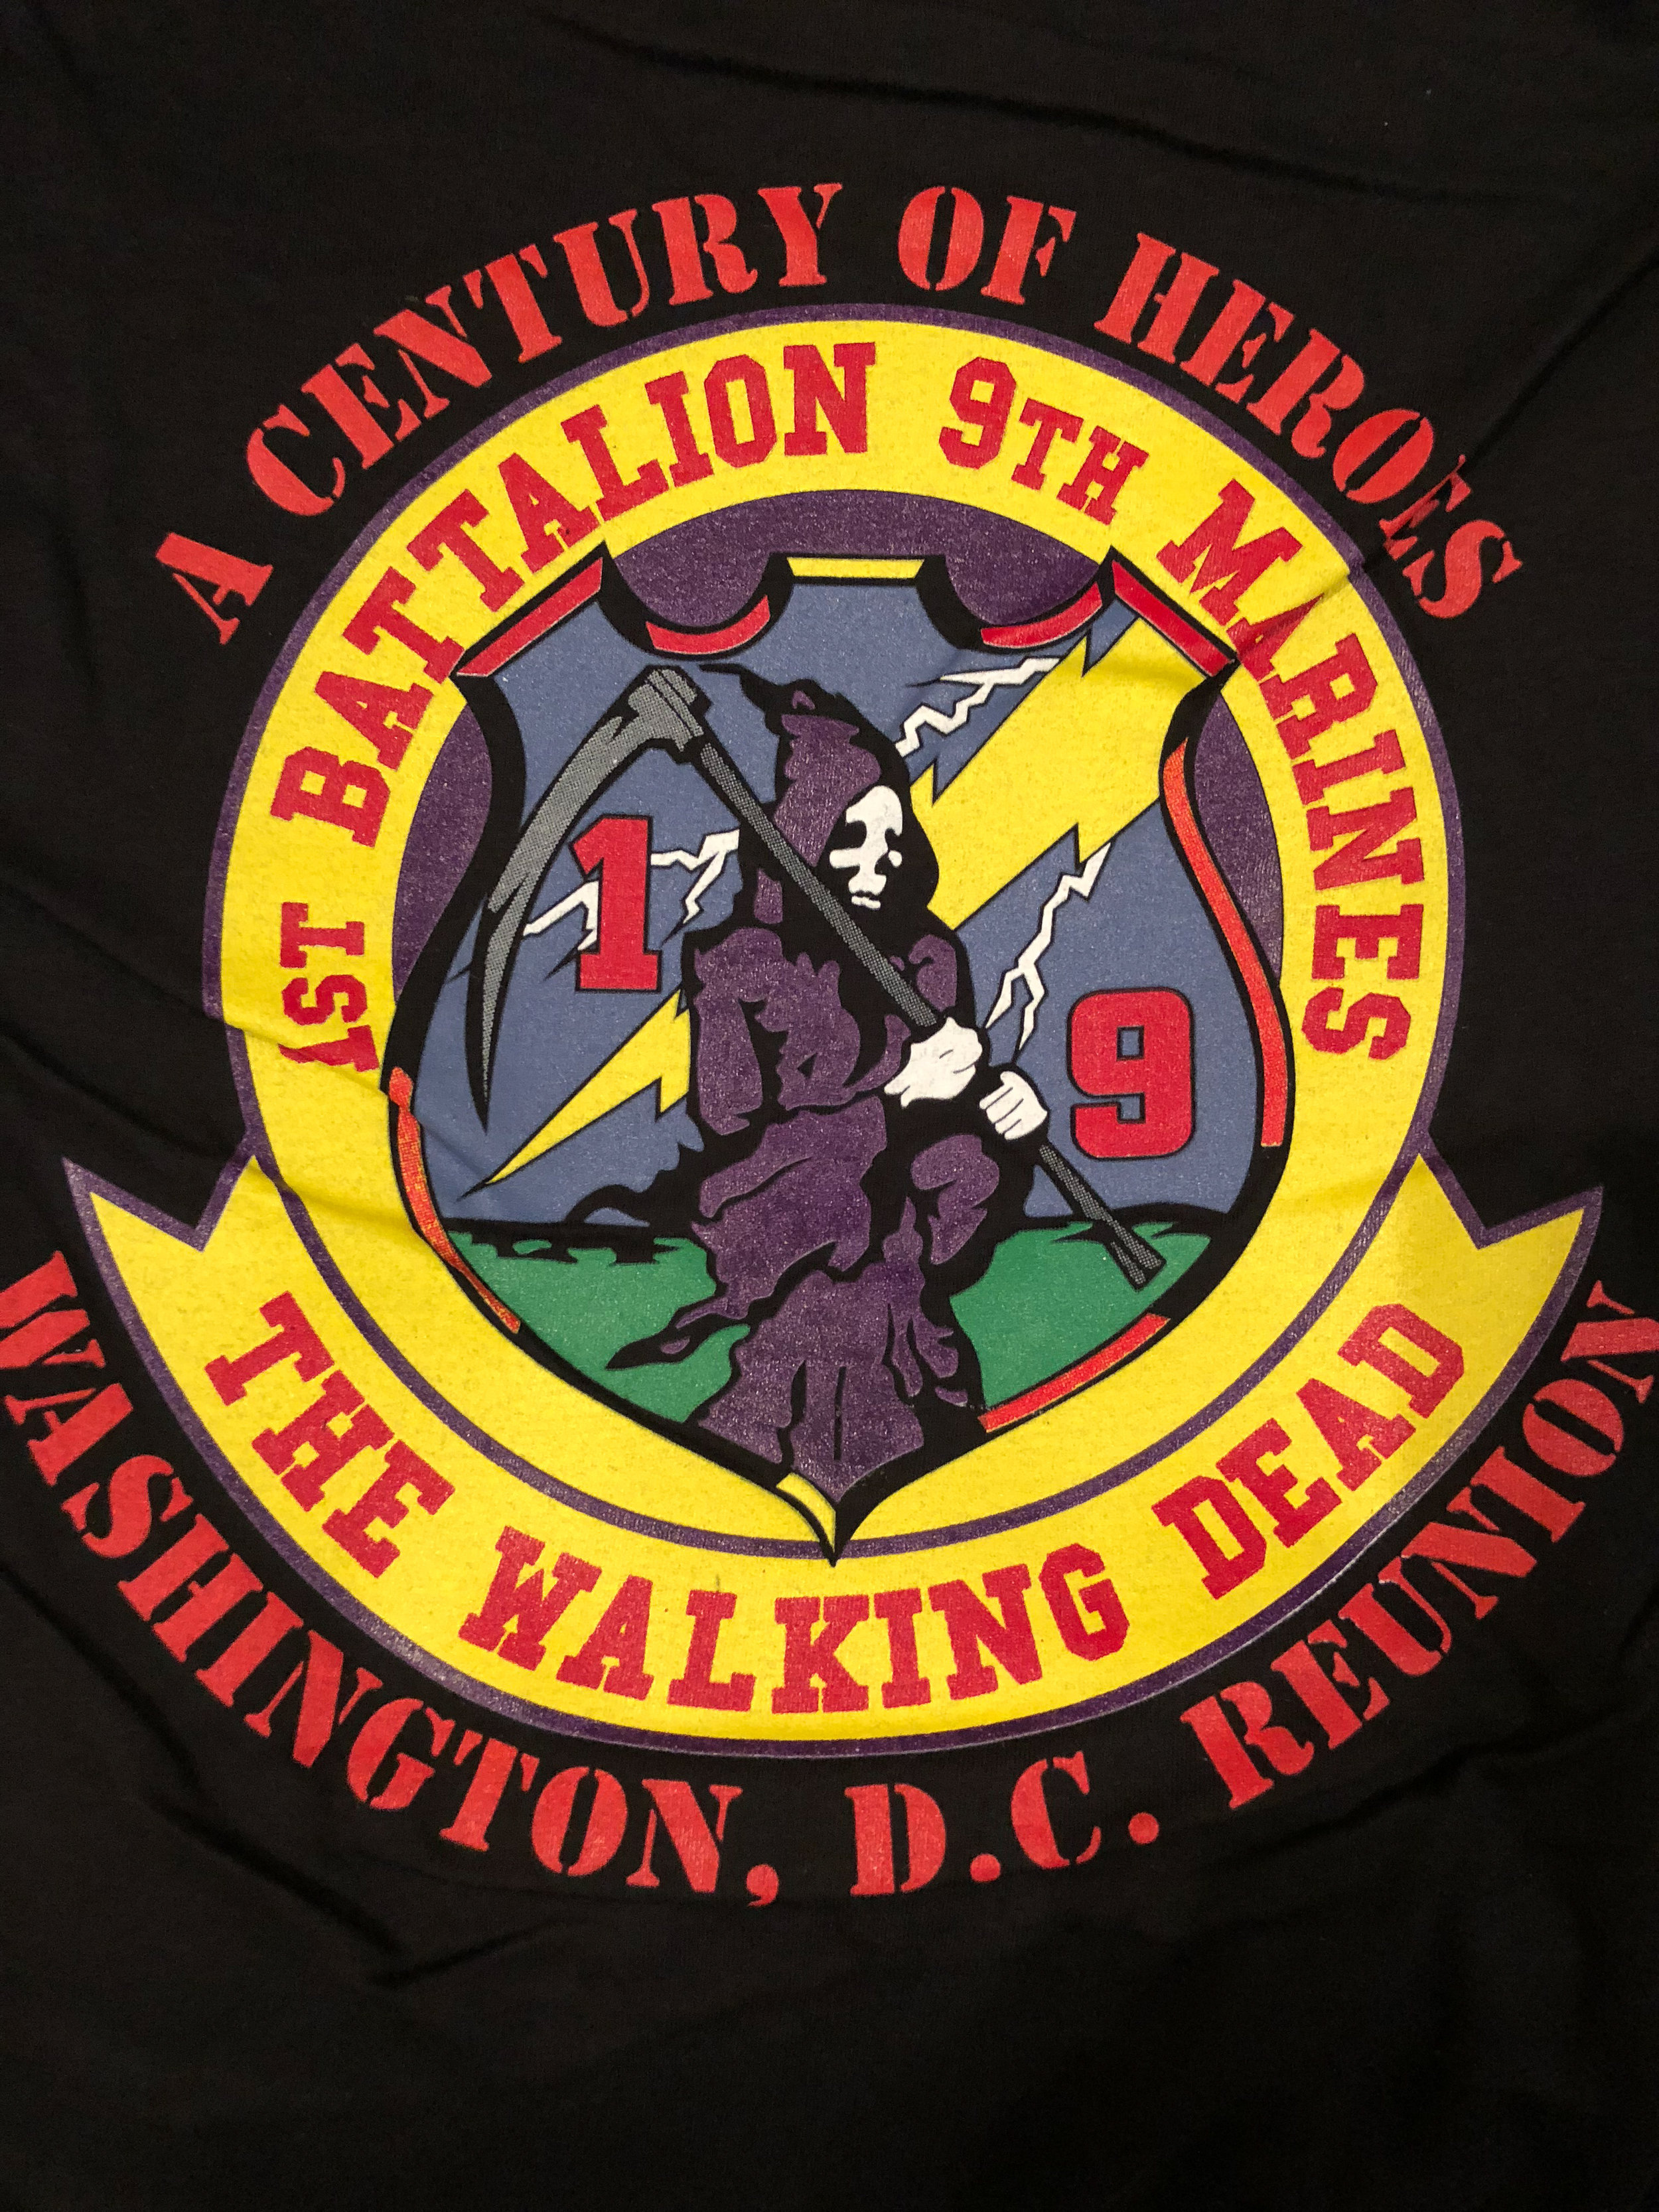 With Iwo Jima front logo Reunion shirt 2 — 1st Battalion 9th Marines ...